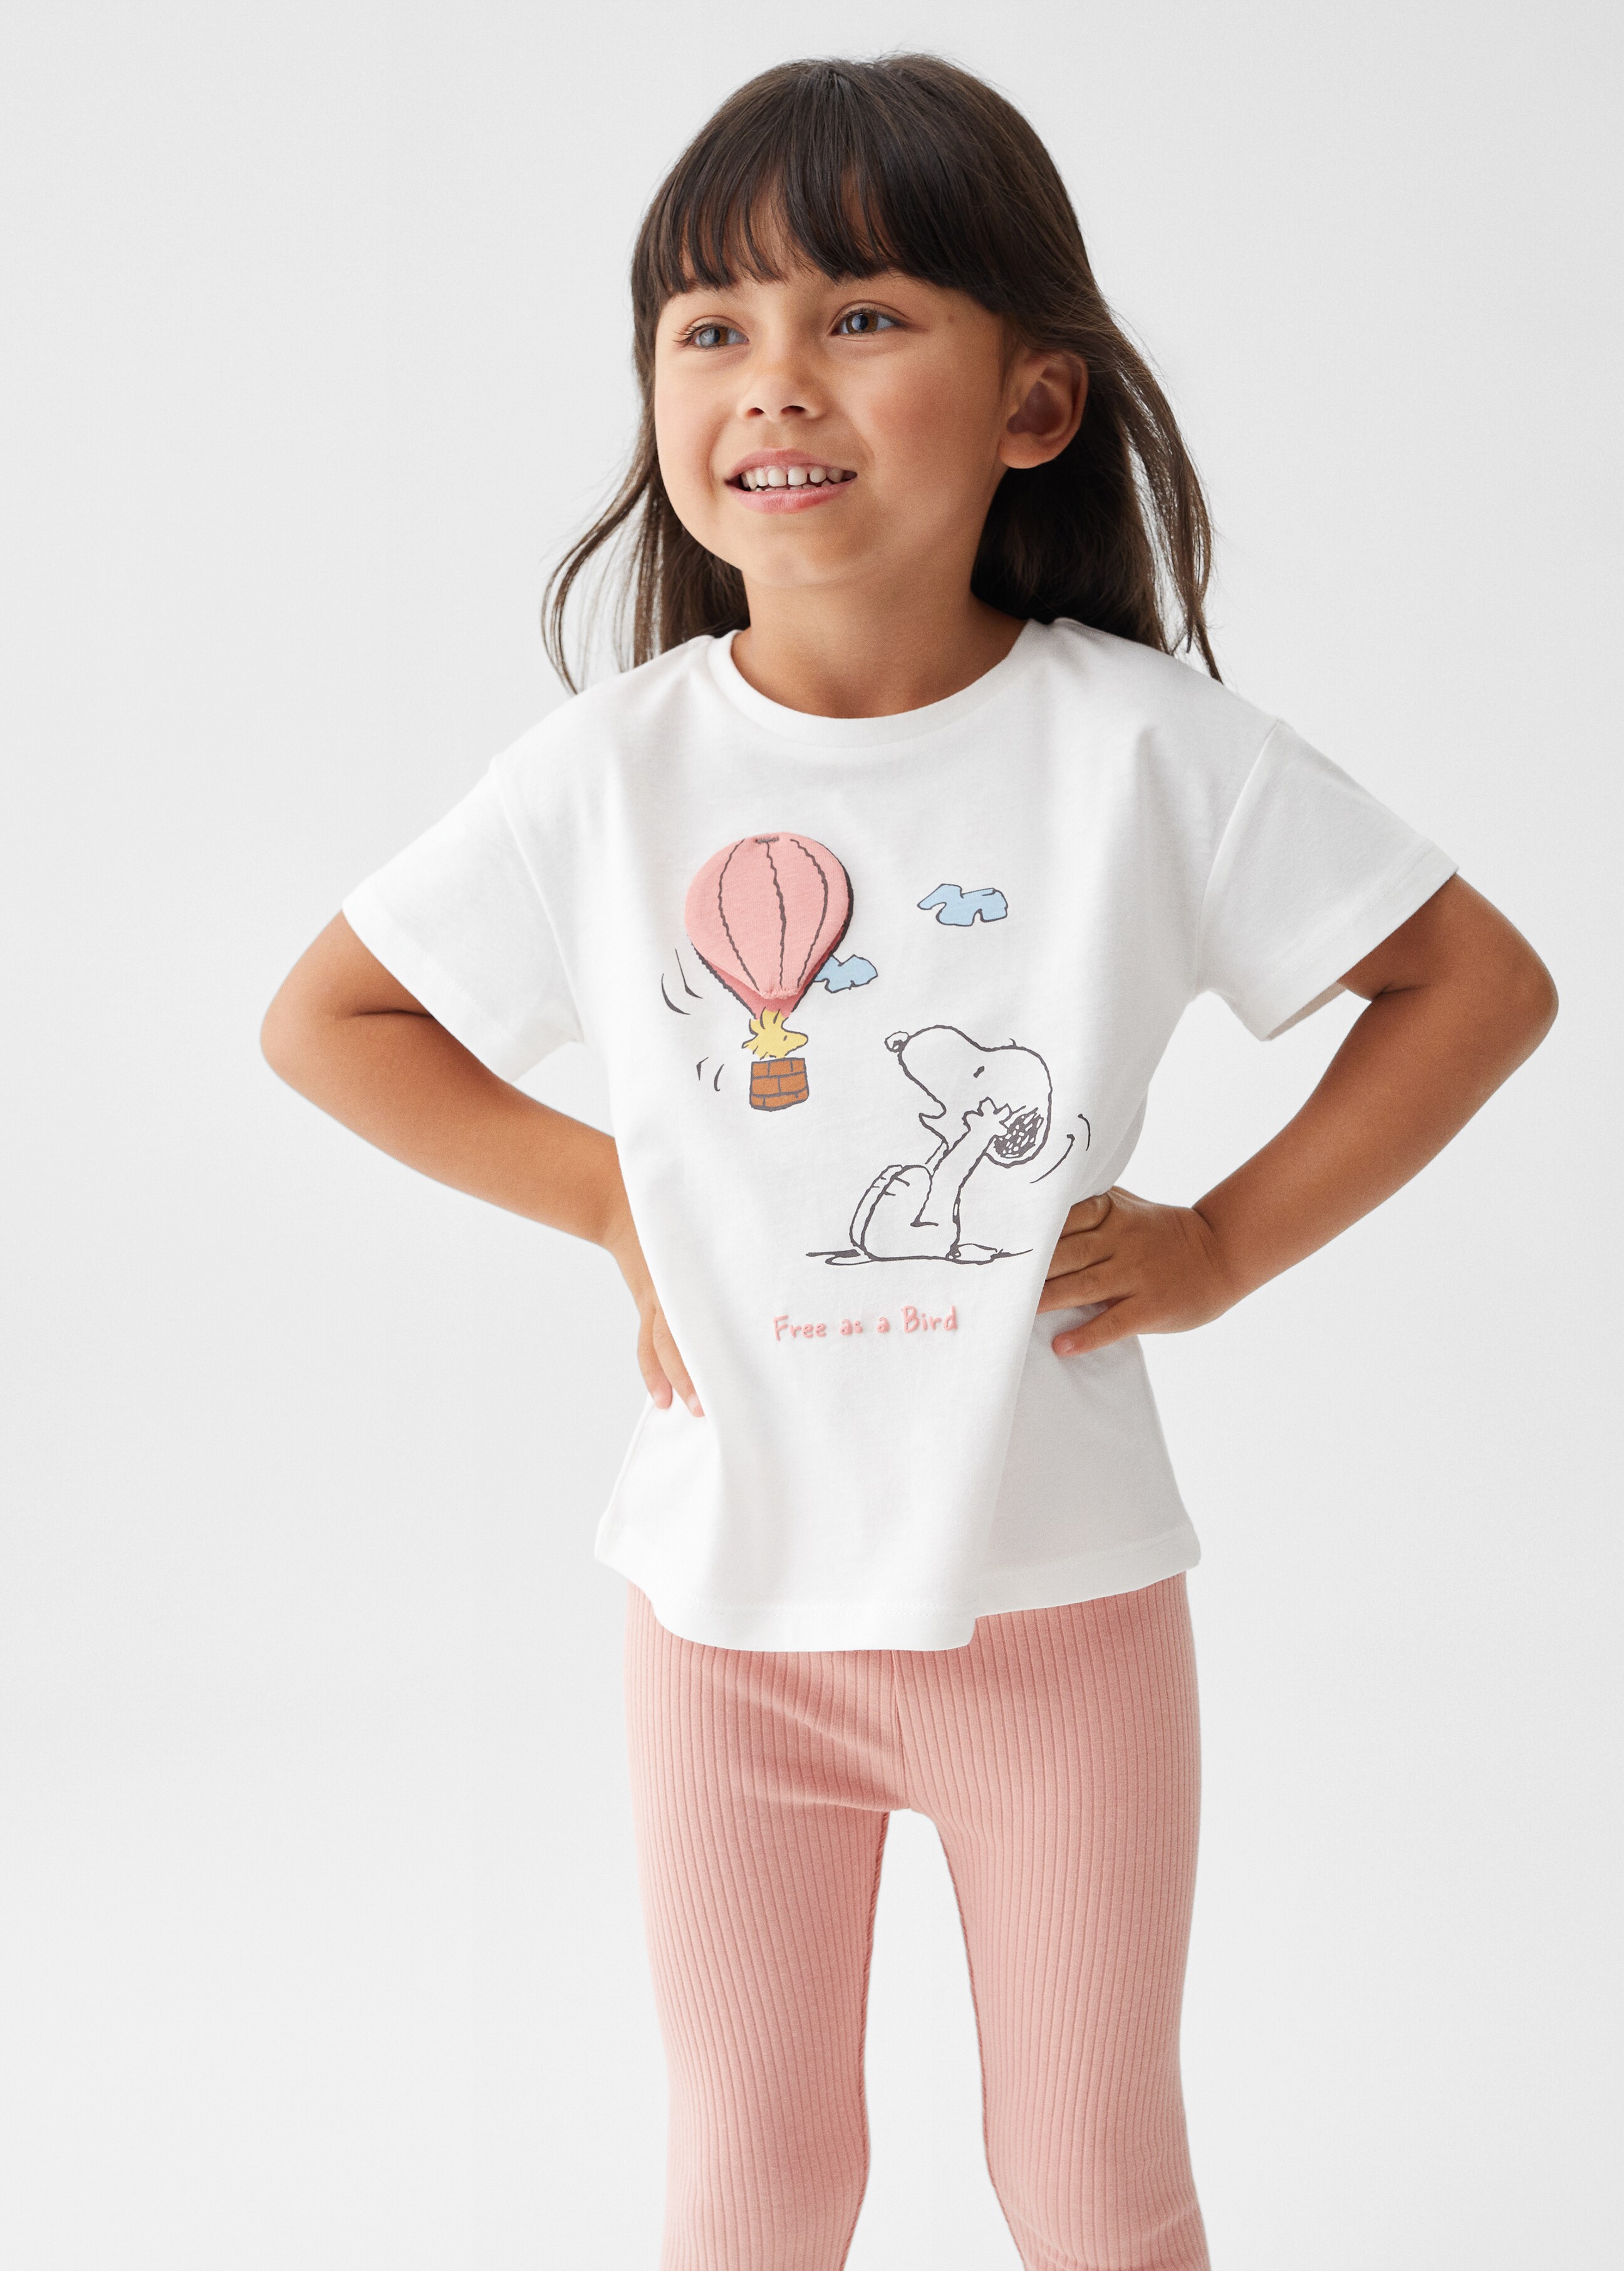 Snoopy printed t-shirt - Medium plane